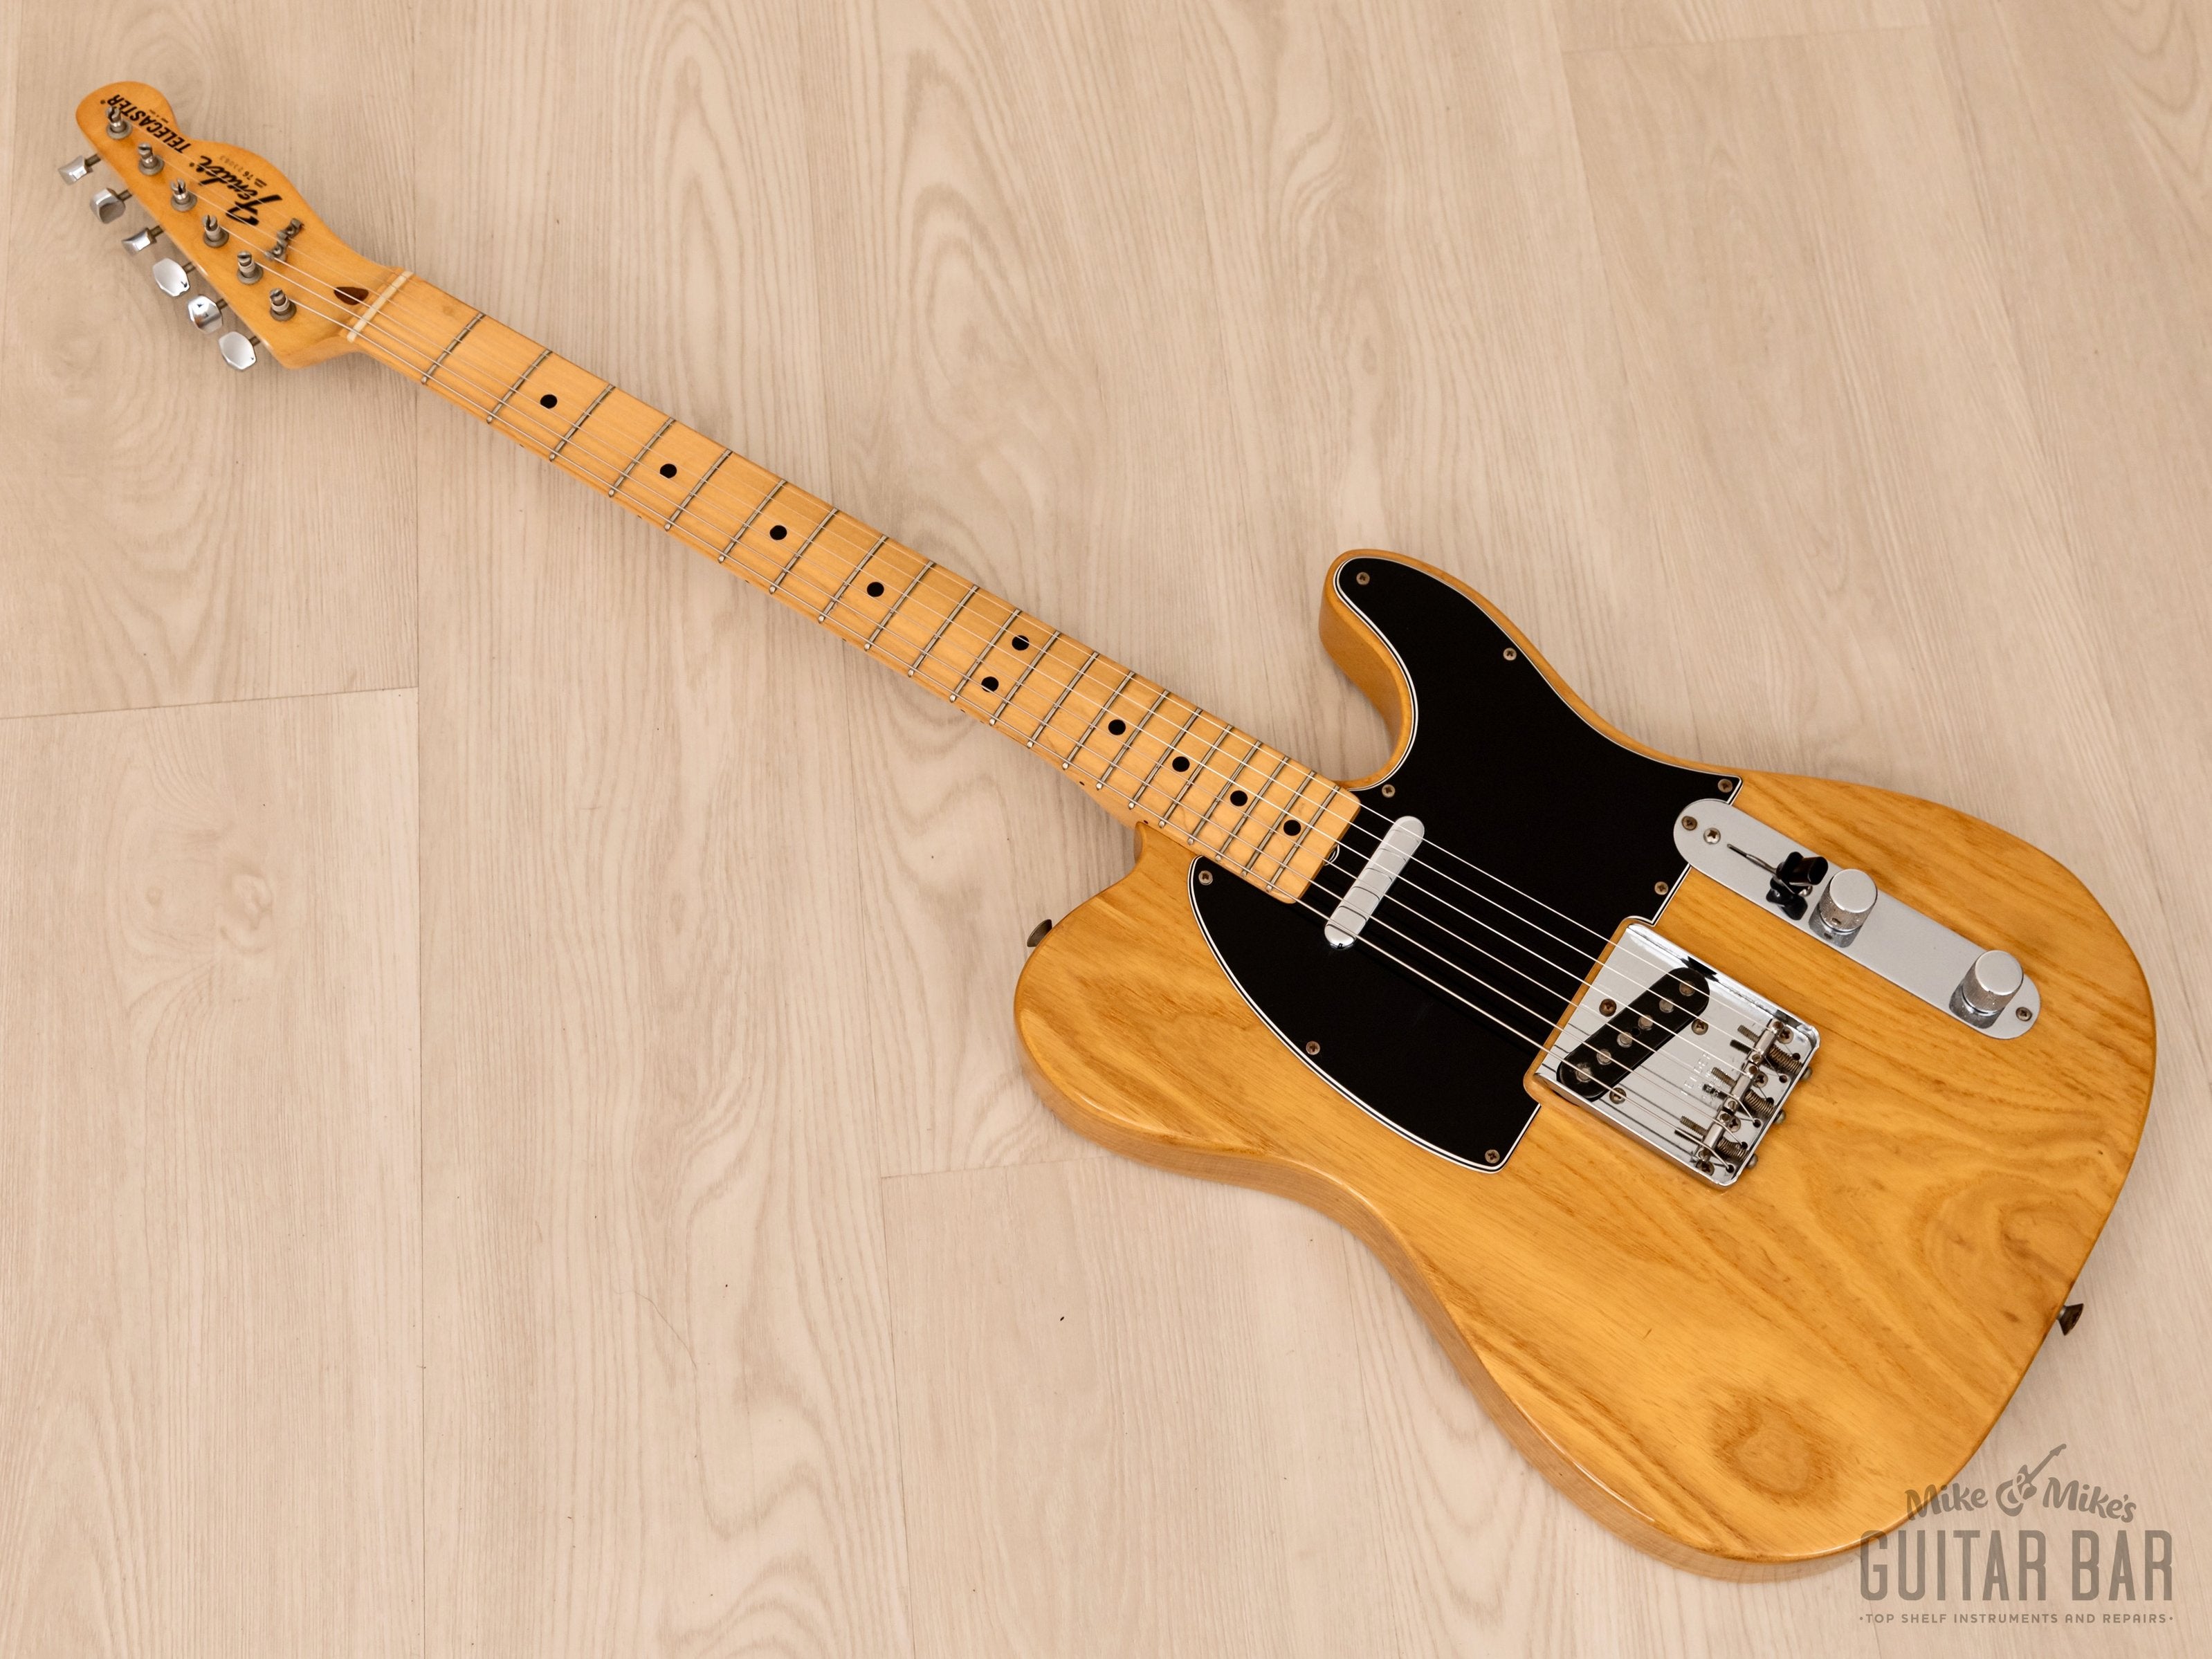 1976 Fender Telecaster Vintage Guitar Butterscotch Collector-Grade w/ Case, Hangtags